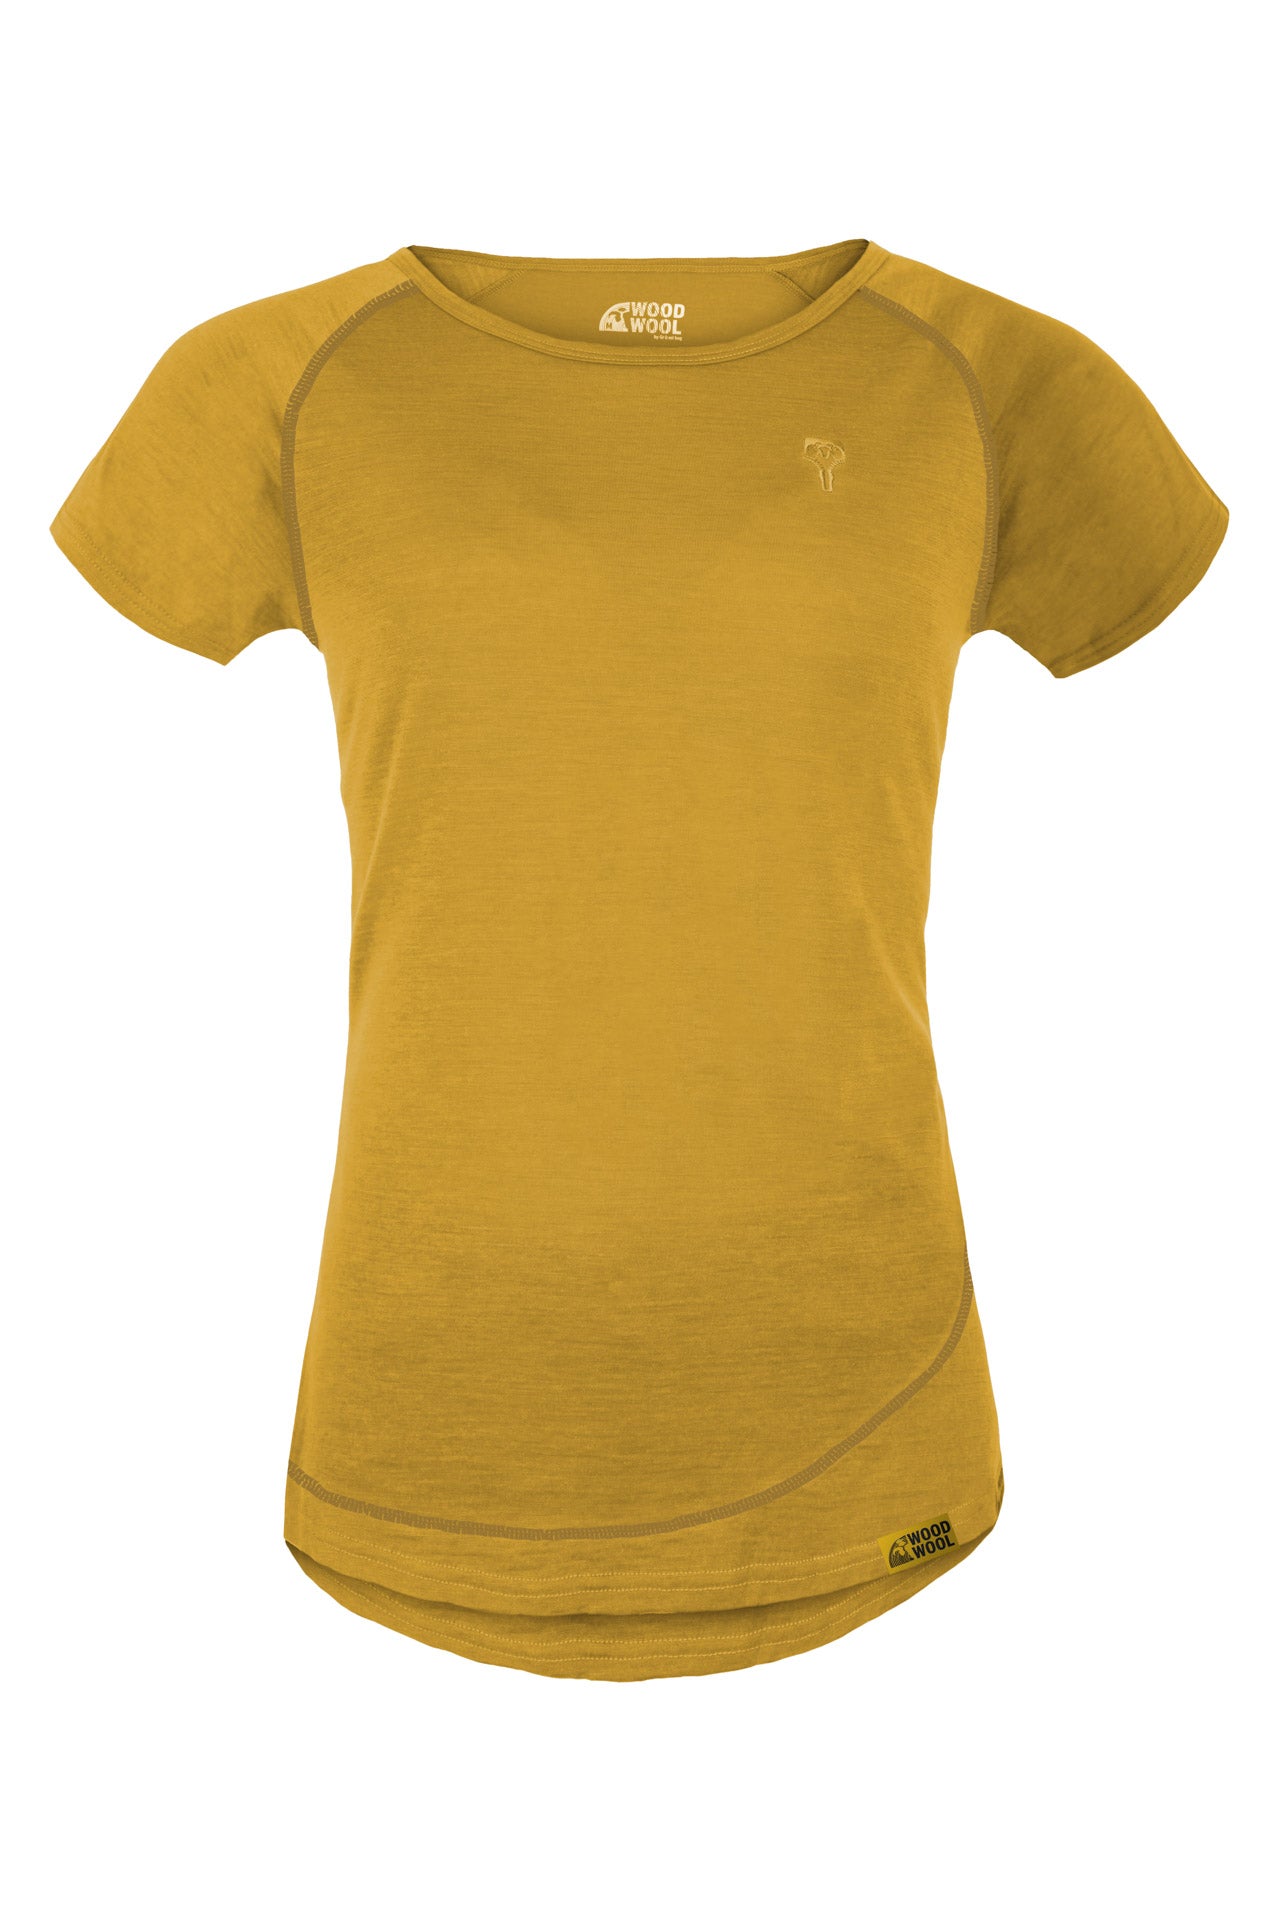 WoodWool T-Shirt Lady Burnham - Daisy Daze Yellow